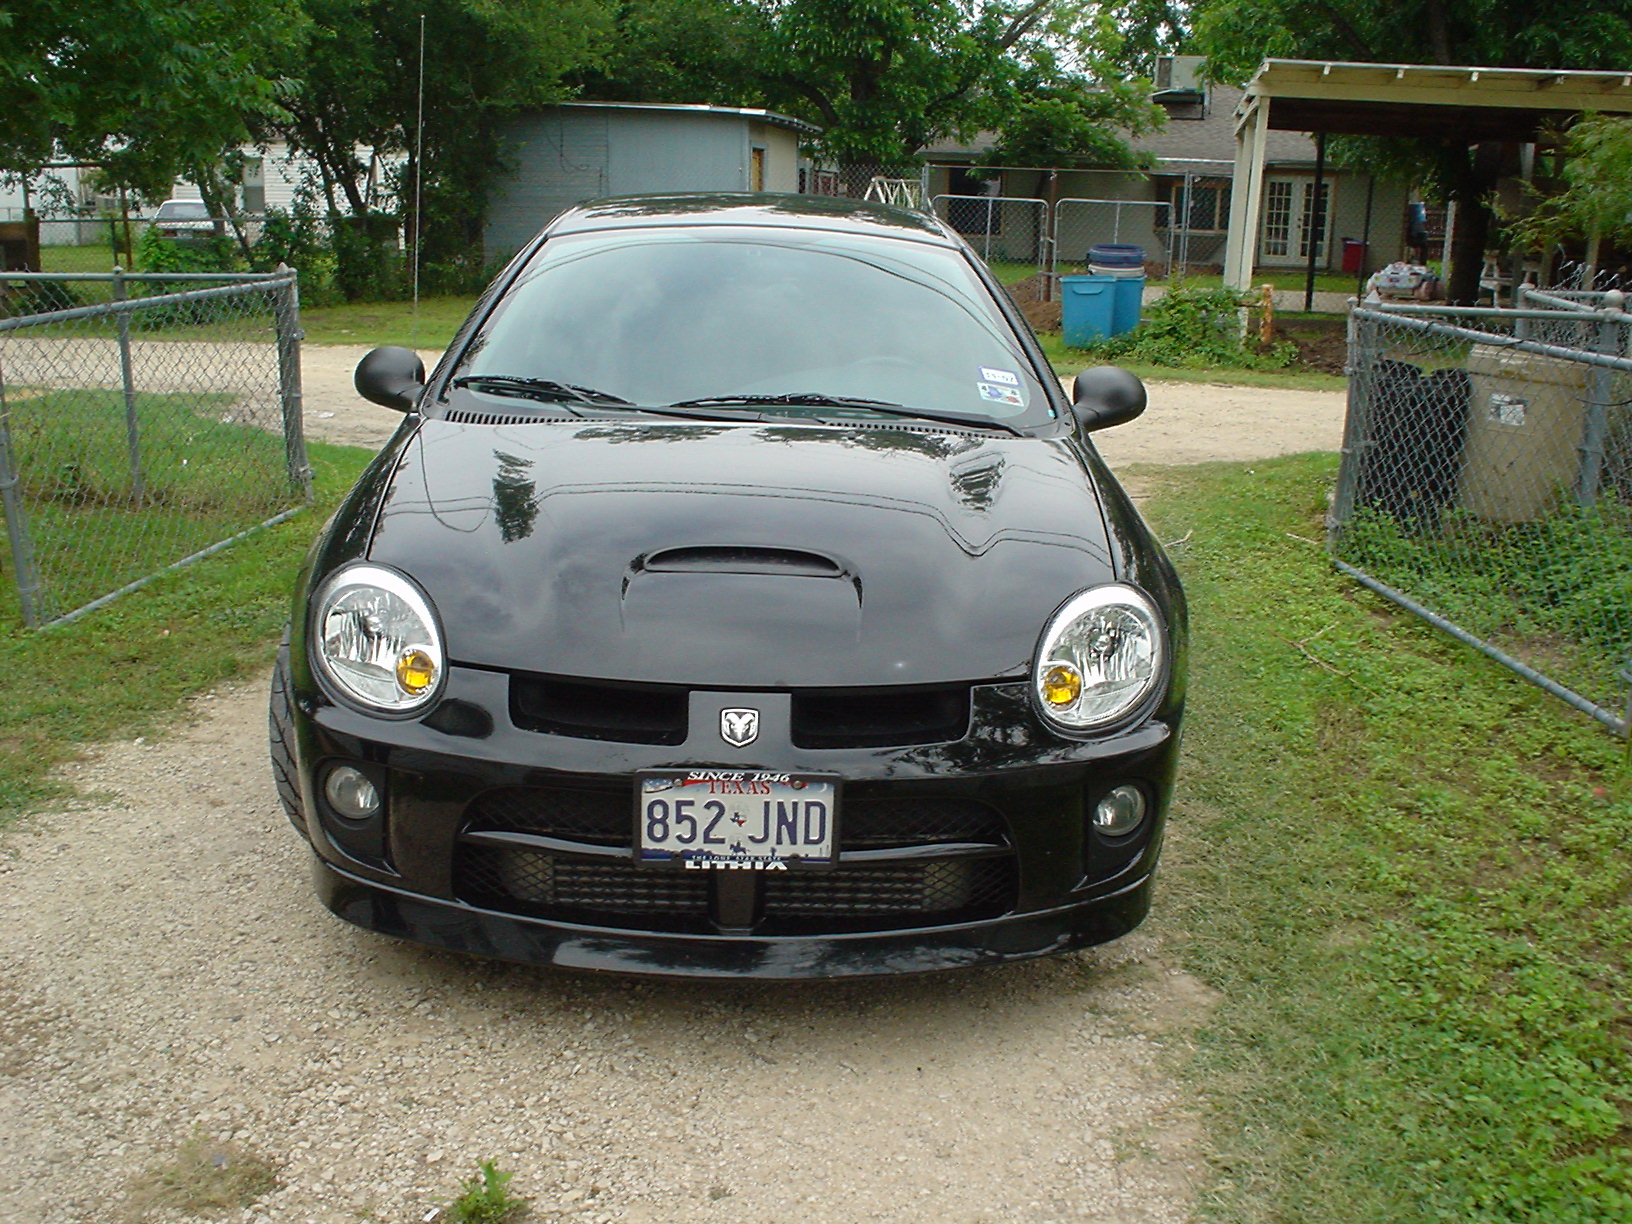 2005  Dodge Neon SRT-4  picture, mods, upgrades